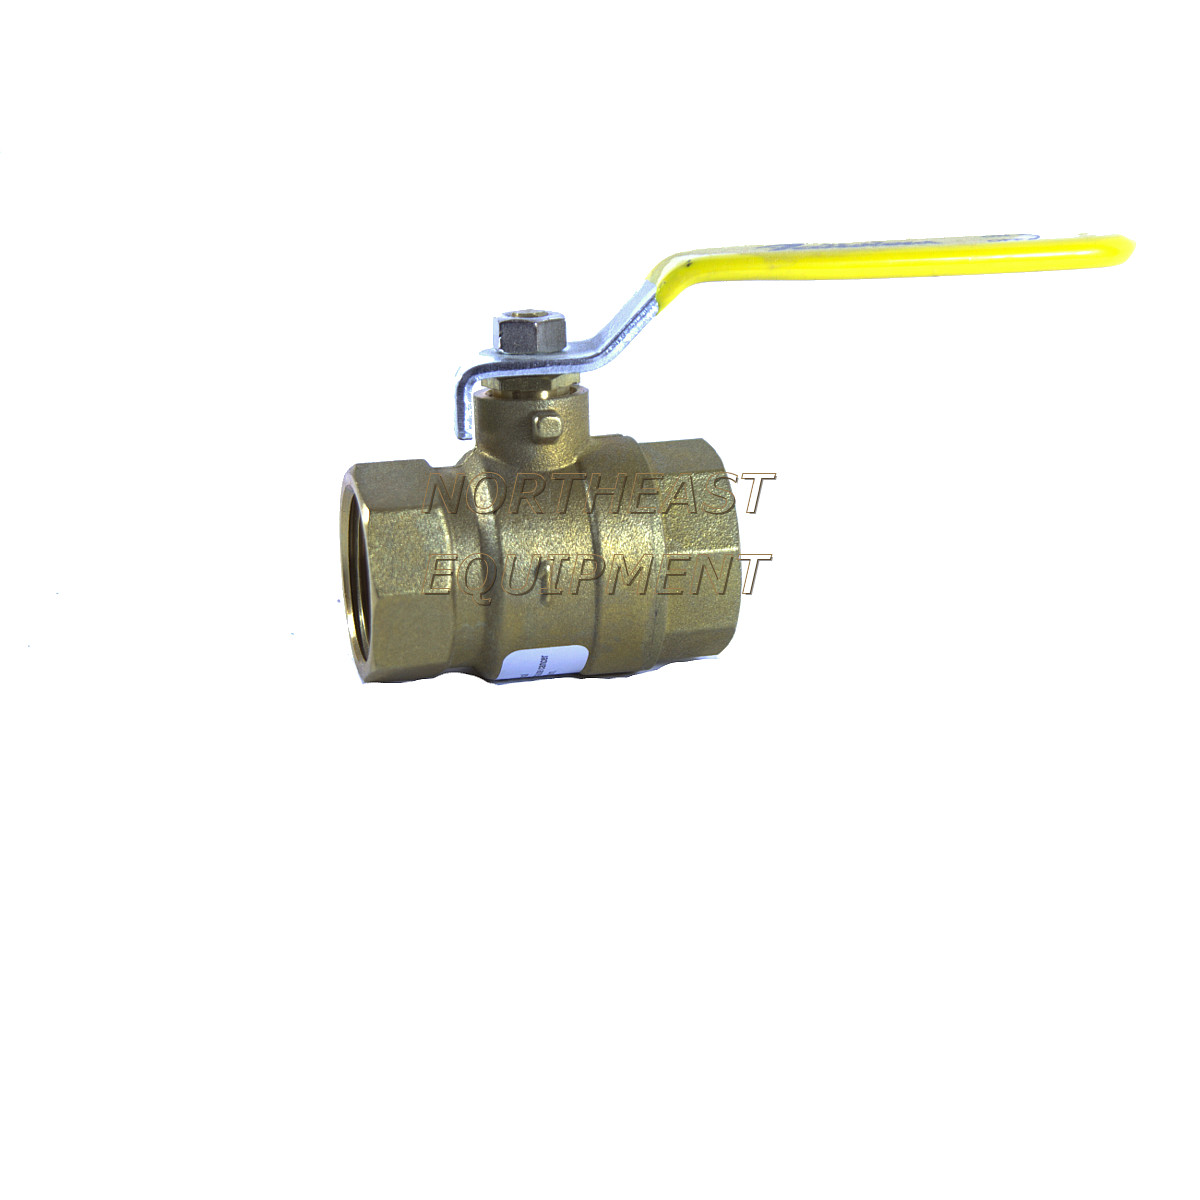 1 inch ball valve, 600WOG